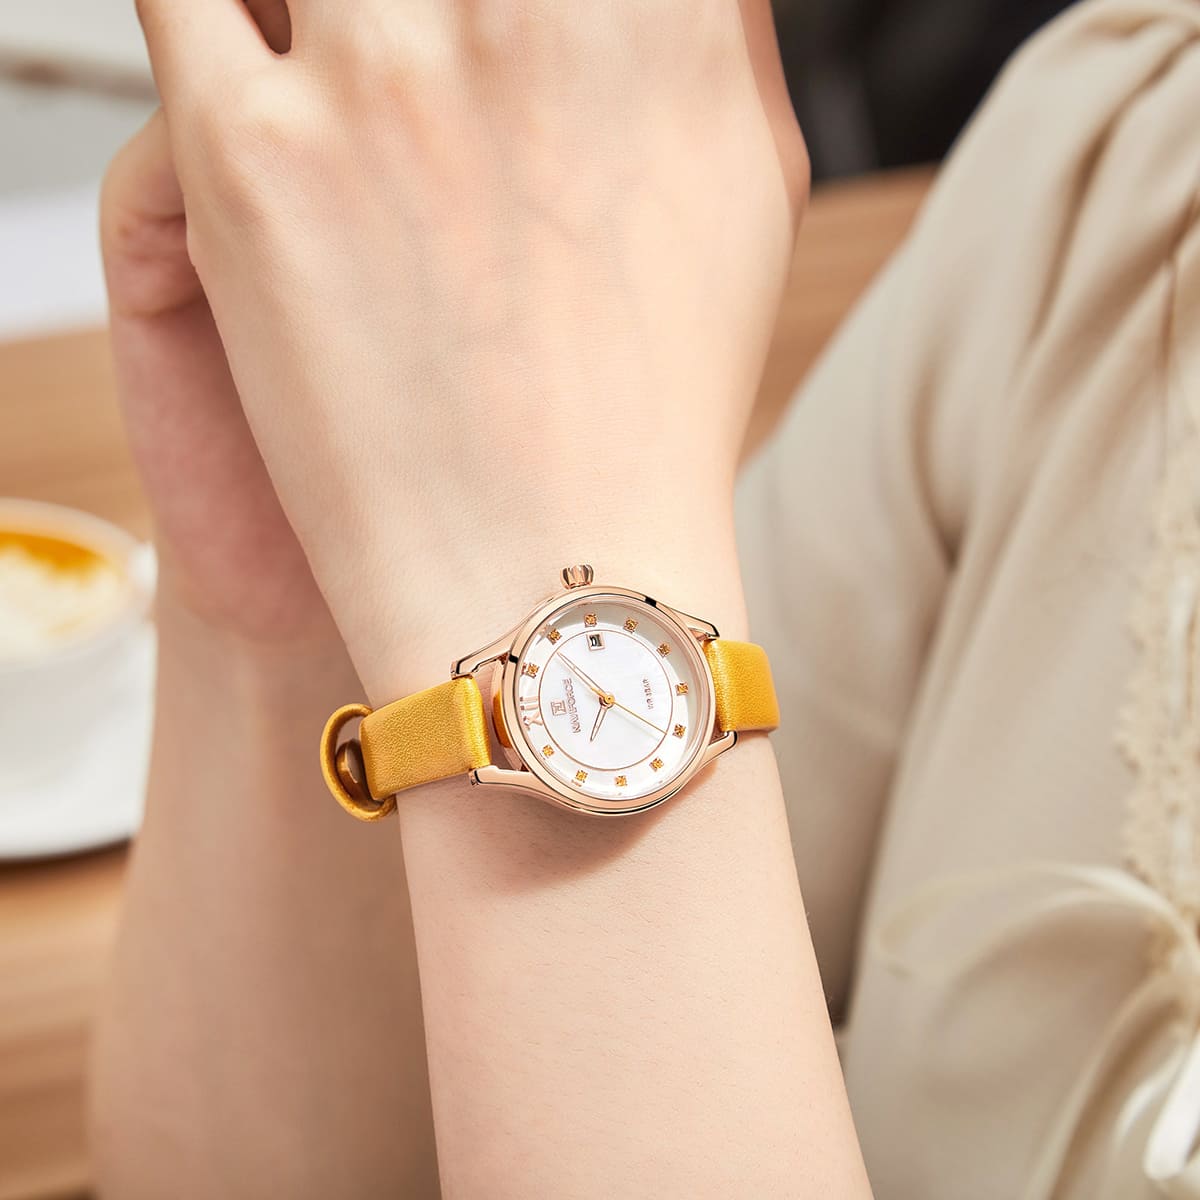 Naviforce Women's Watch NF5010 RG W Y | Watches Prime